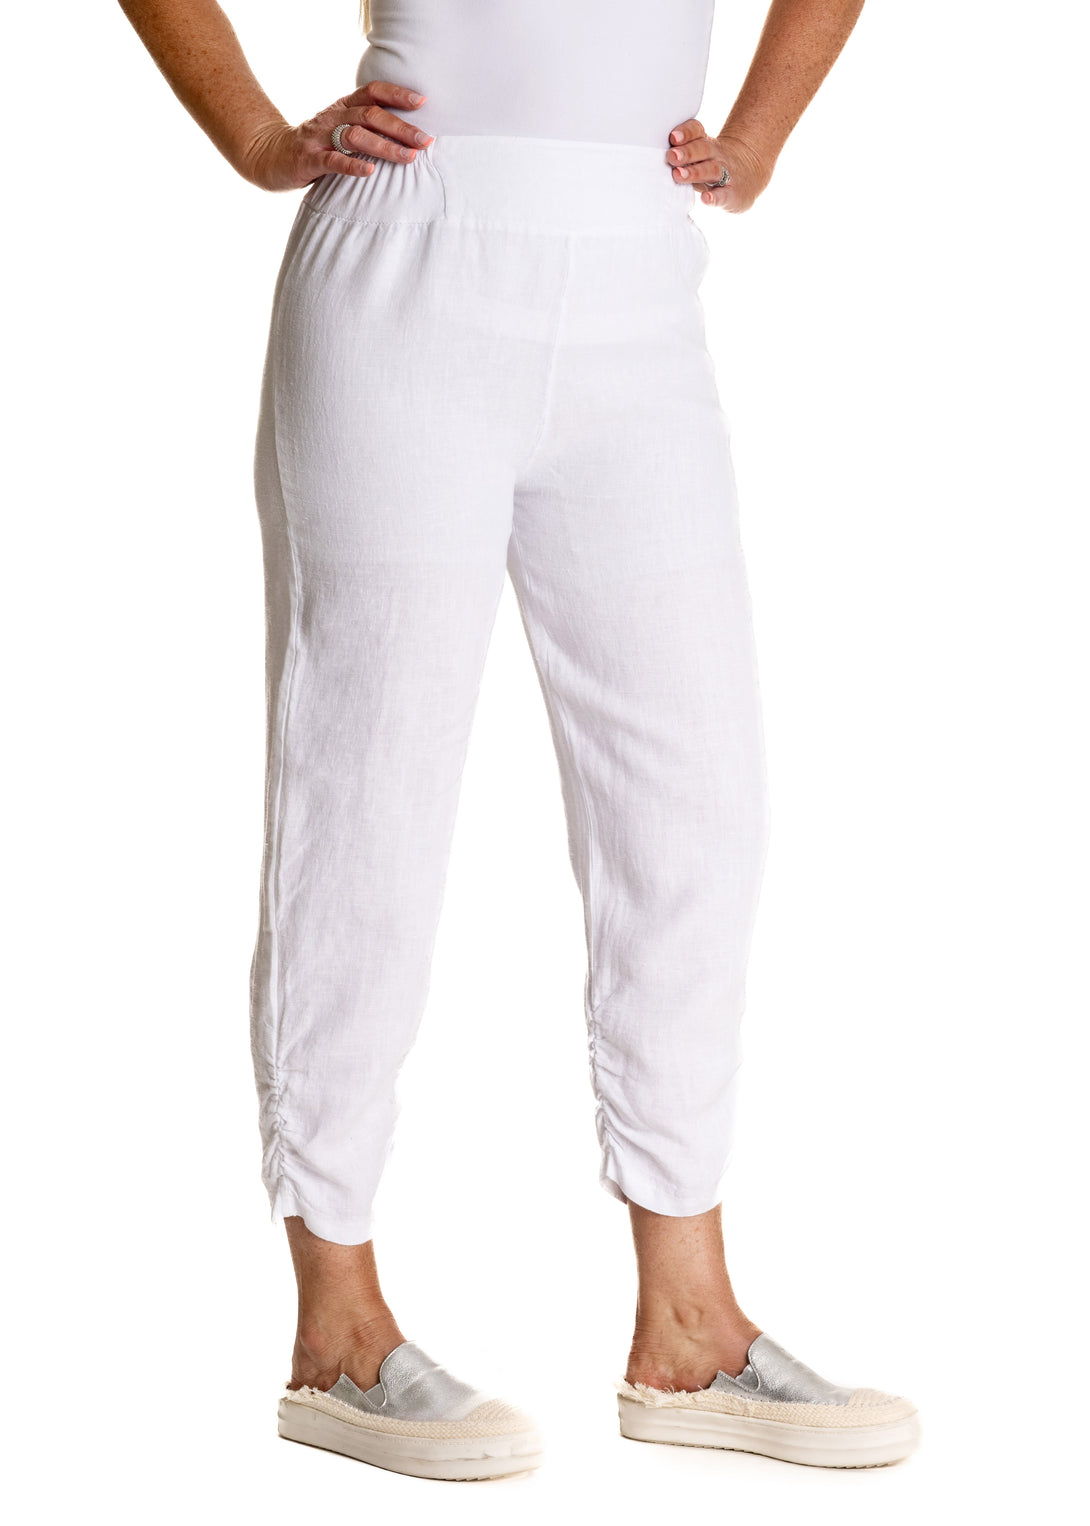 Kaylee Pants in White - Imagine Fashion